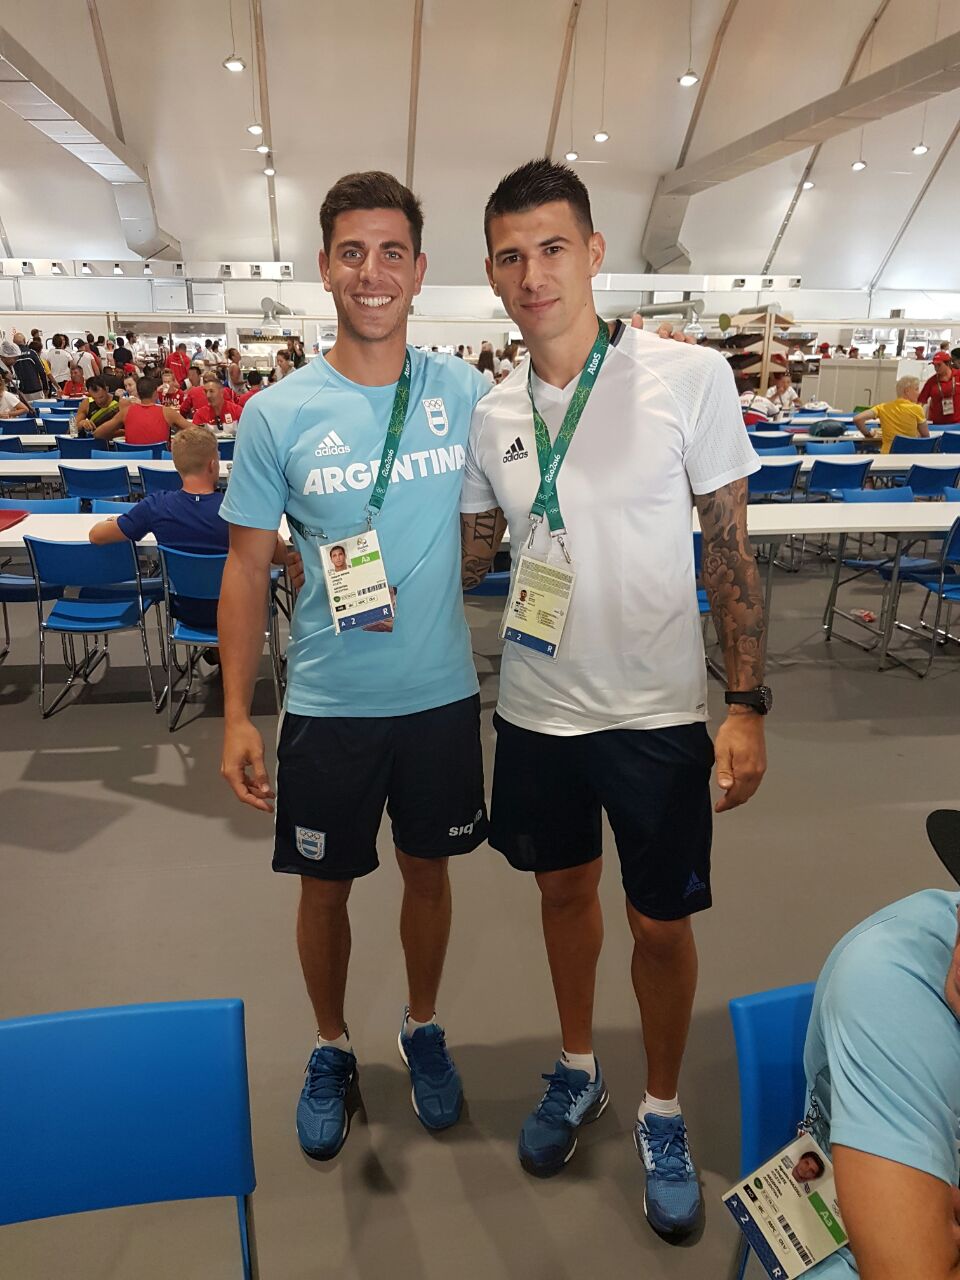 Argentinien Olympia 2016 Trikot enthüllt - Nur Fussball